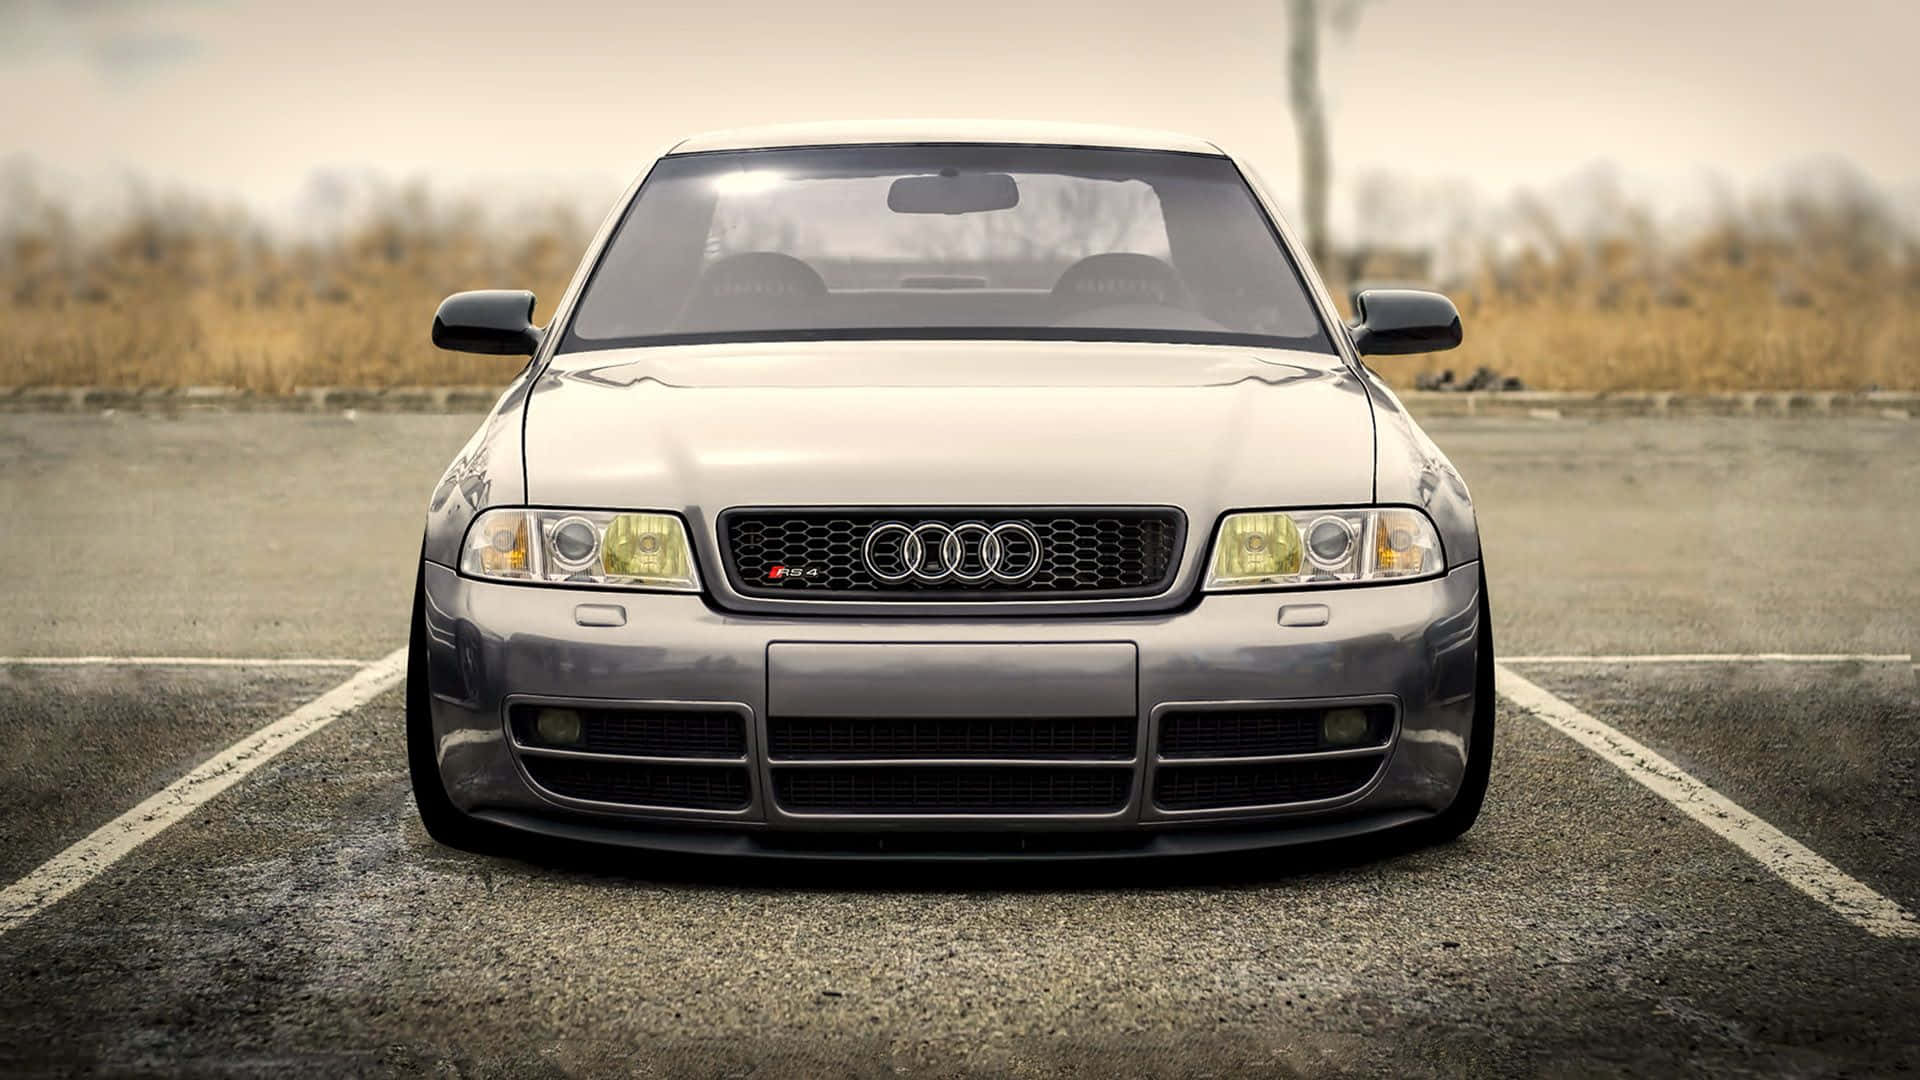 Audi S4 in Action Wallpaper